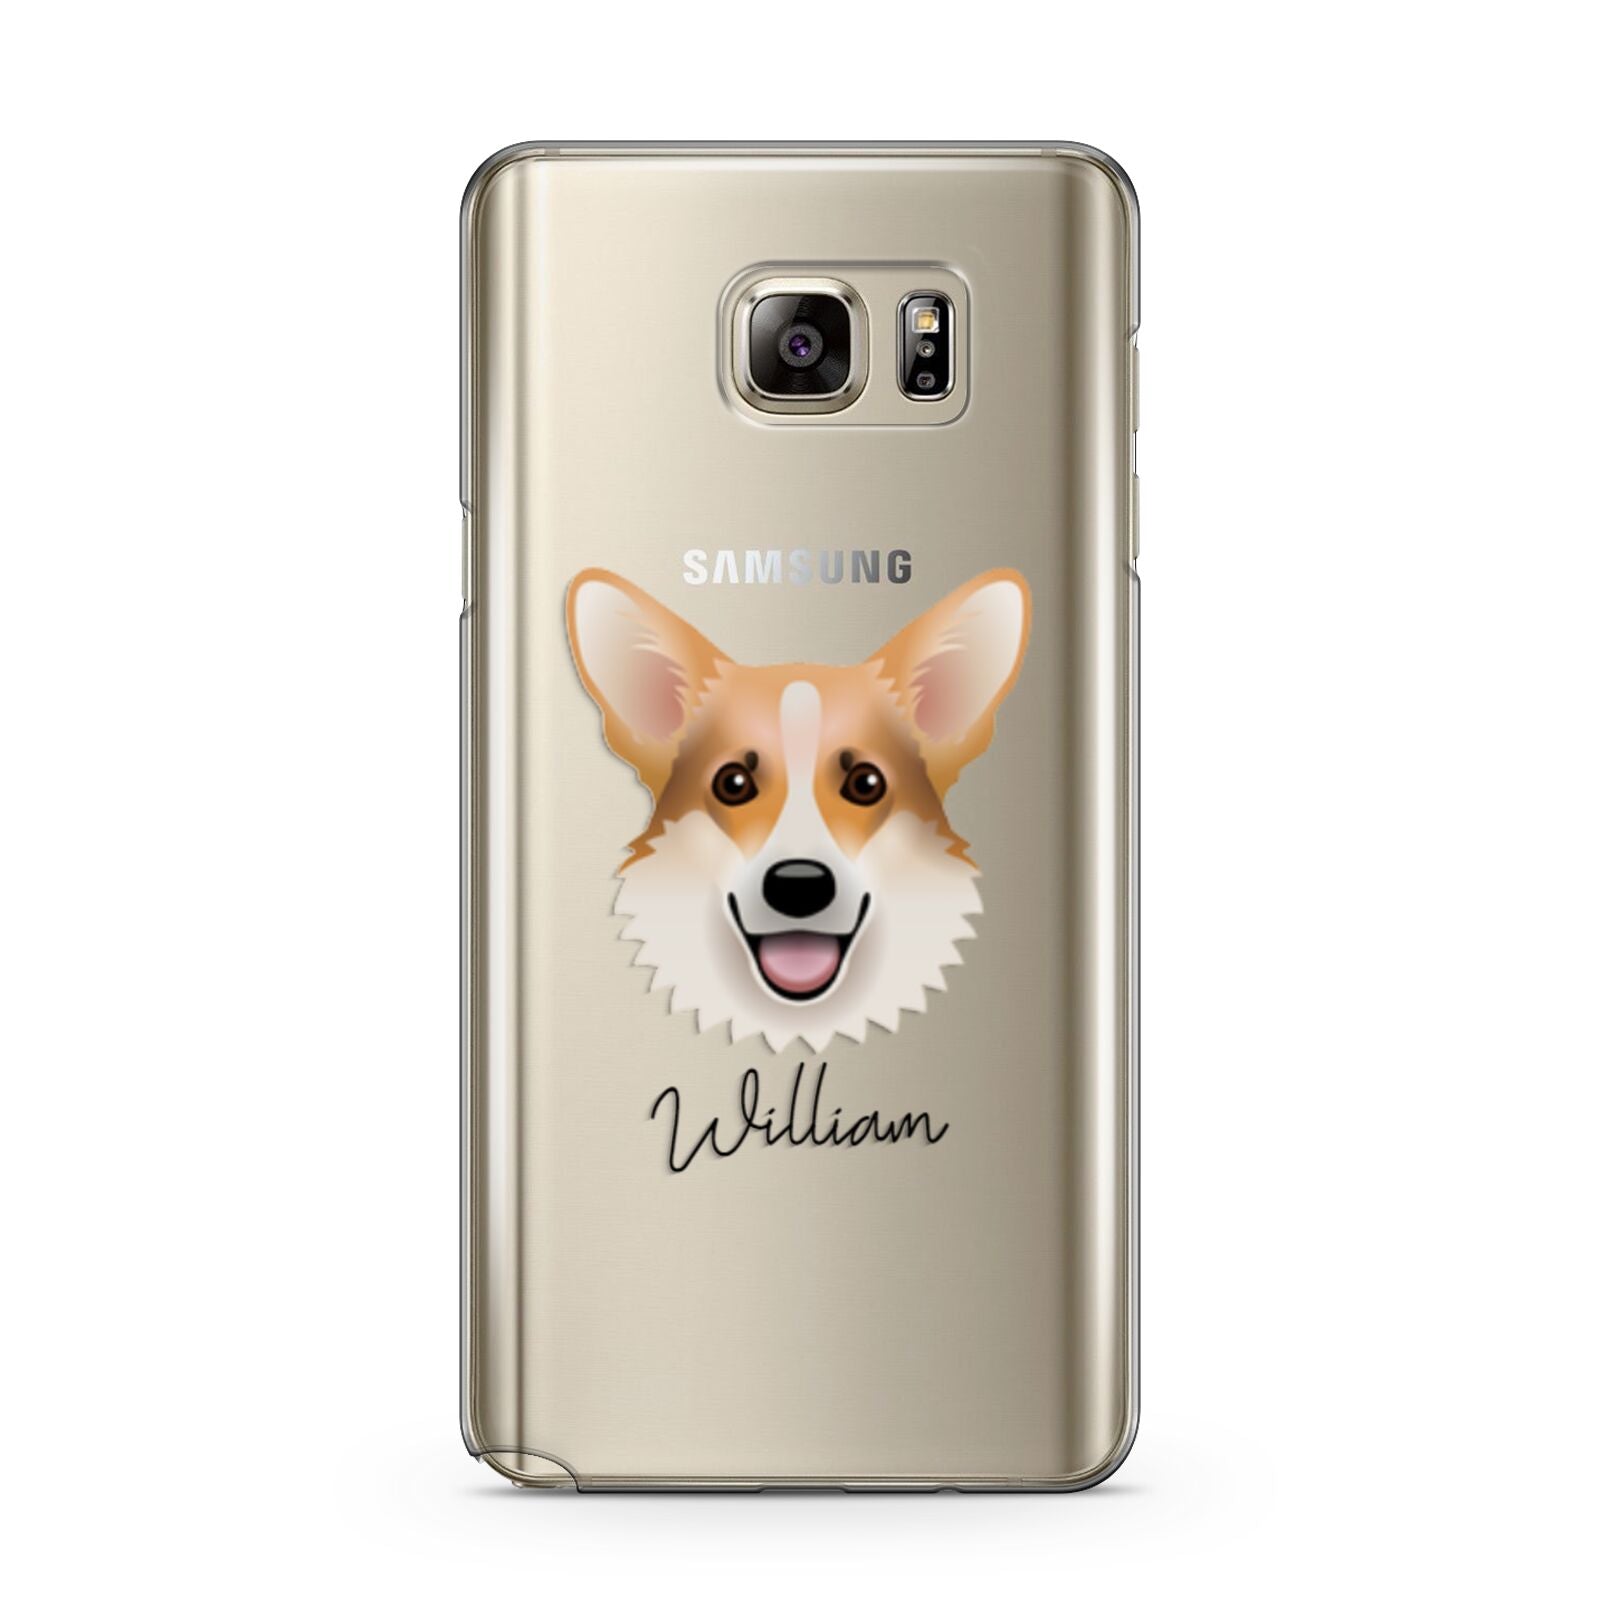 Corgi Personalised Samsung Galaxy Note 5 Case